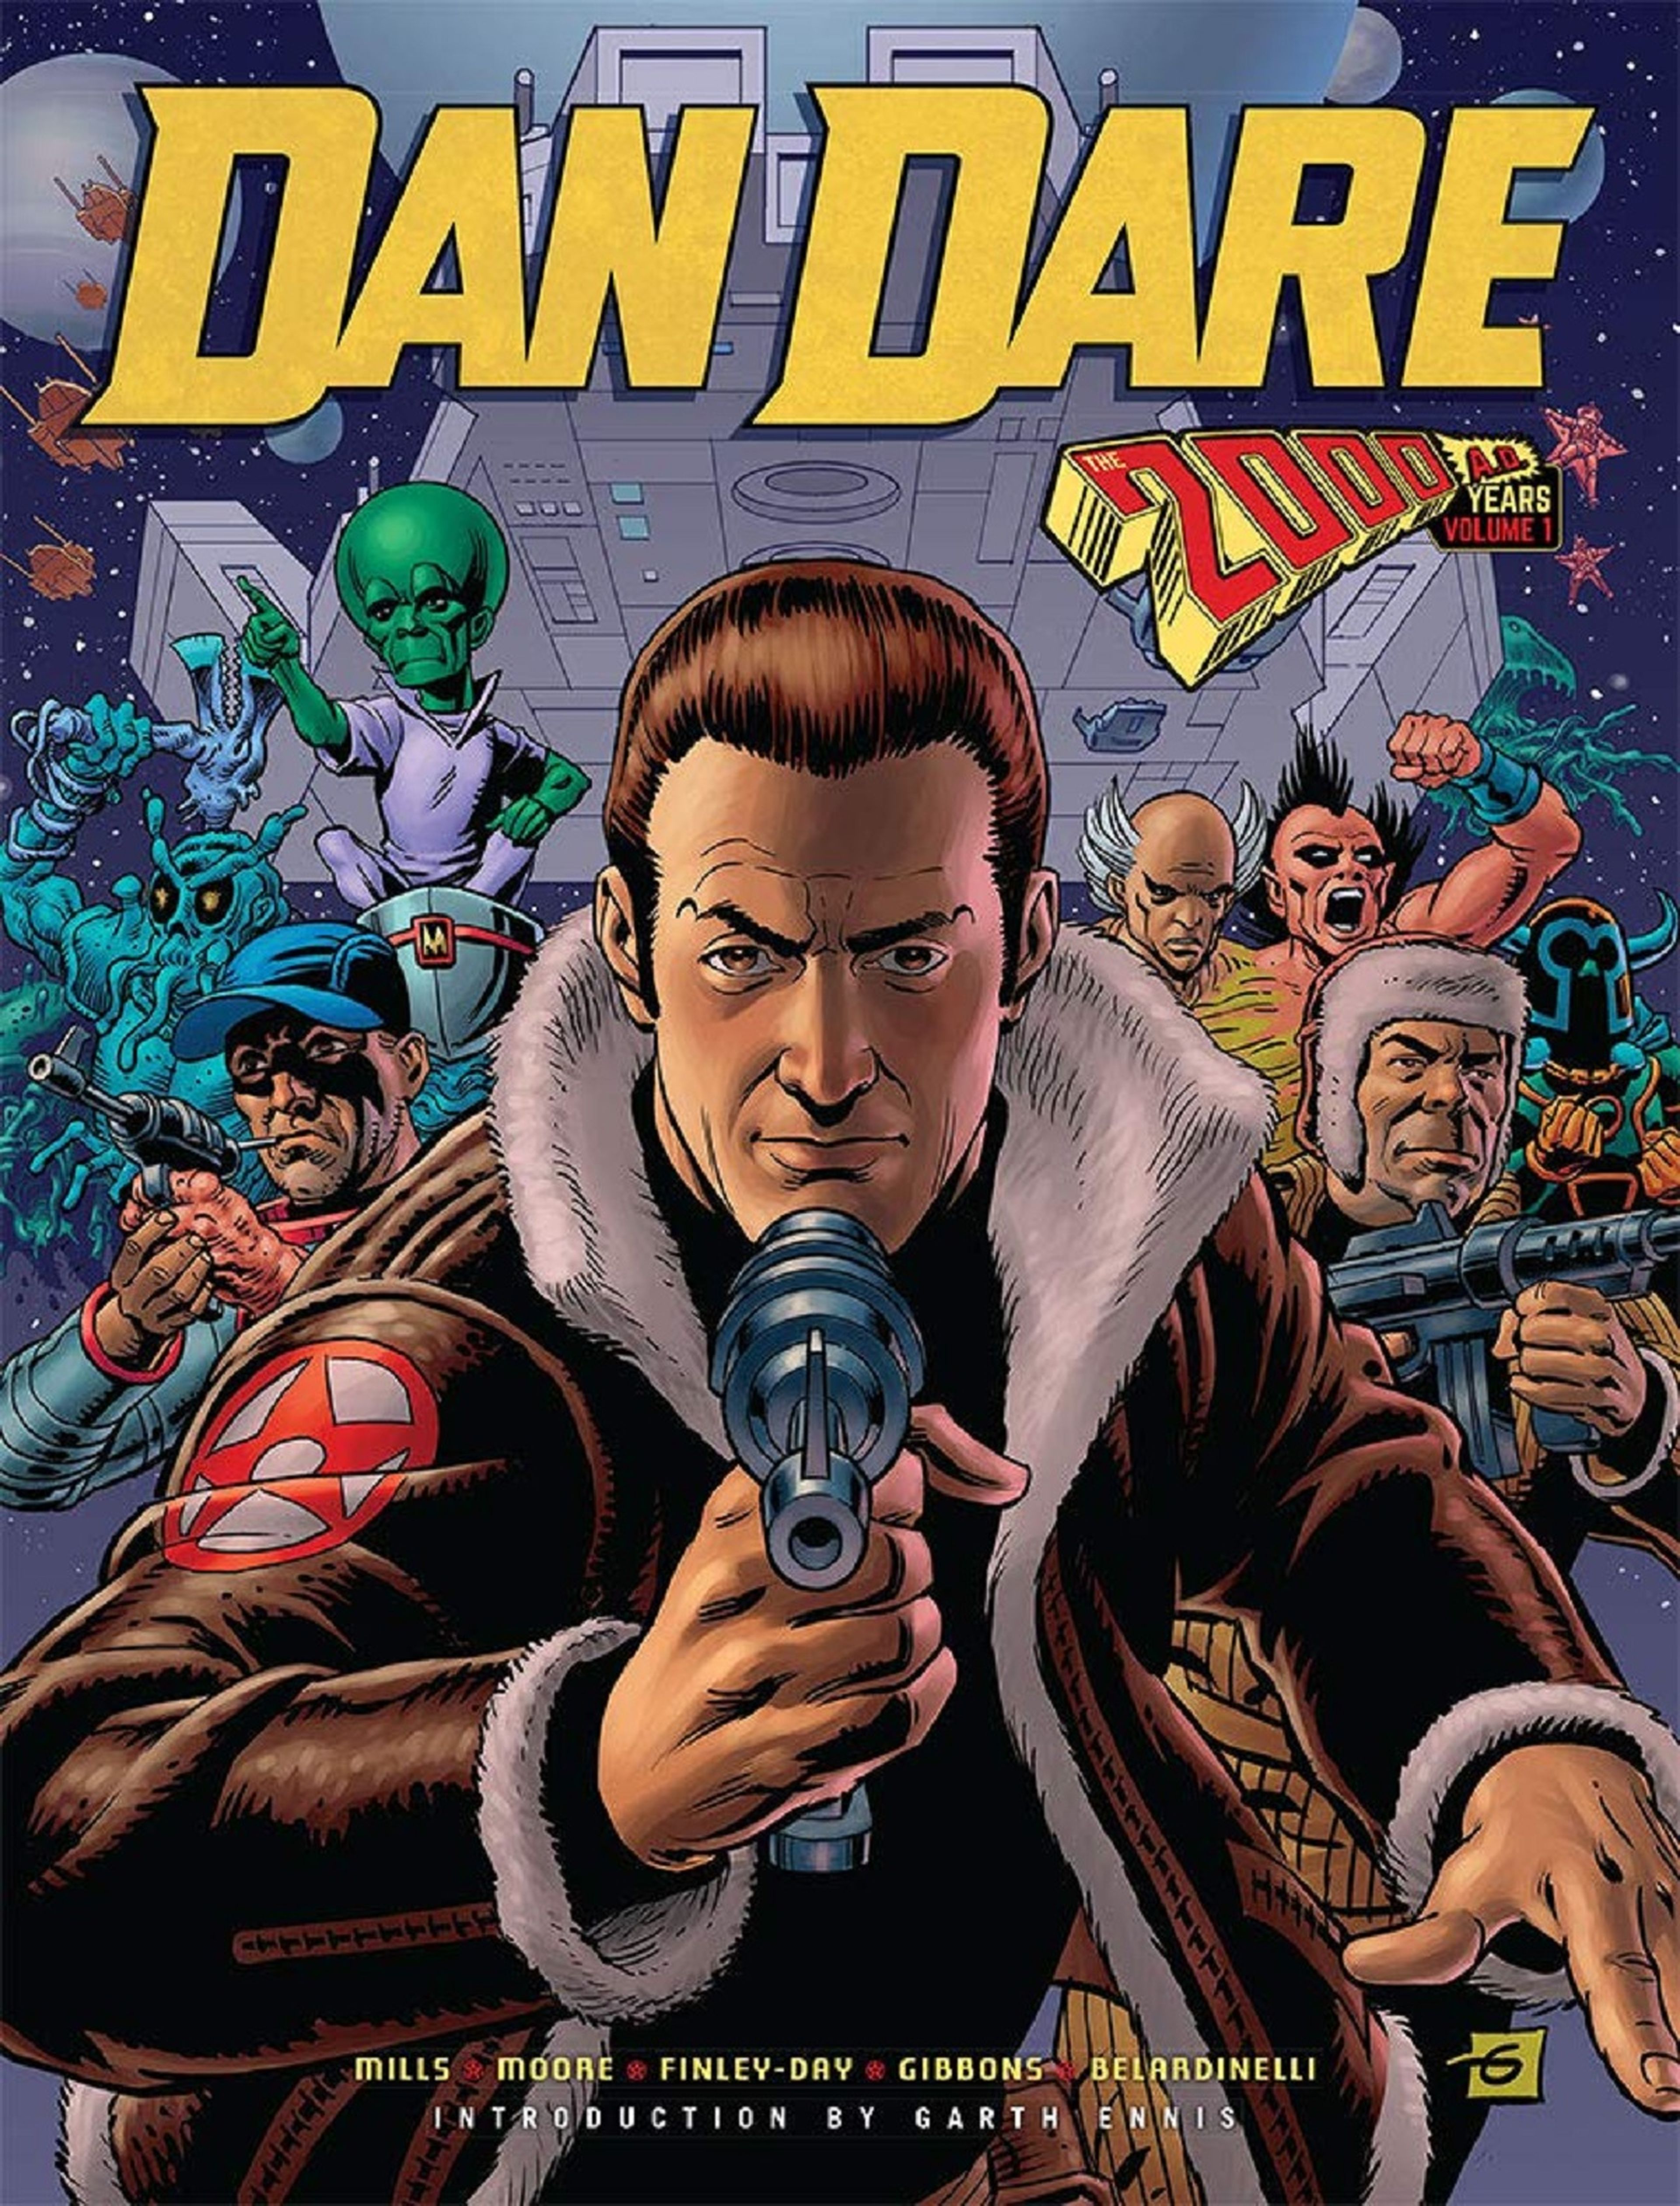 Dan Dare (cómic)